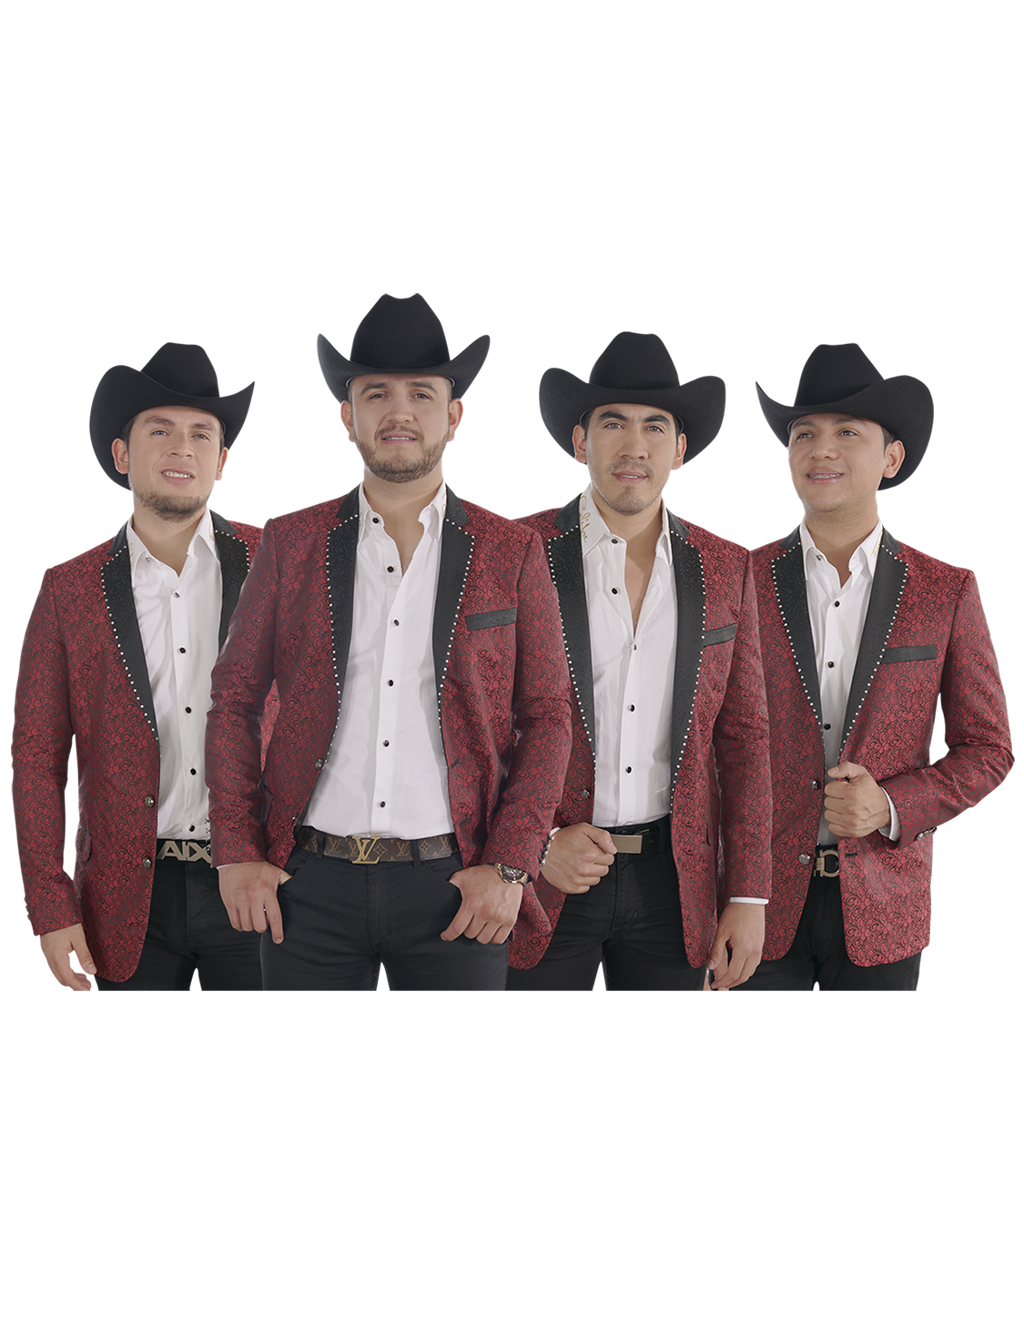 Latin quartet 'Calibre 50' to perform two shows at Chumash Casino Resort, Valley Life